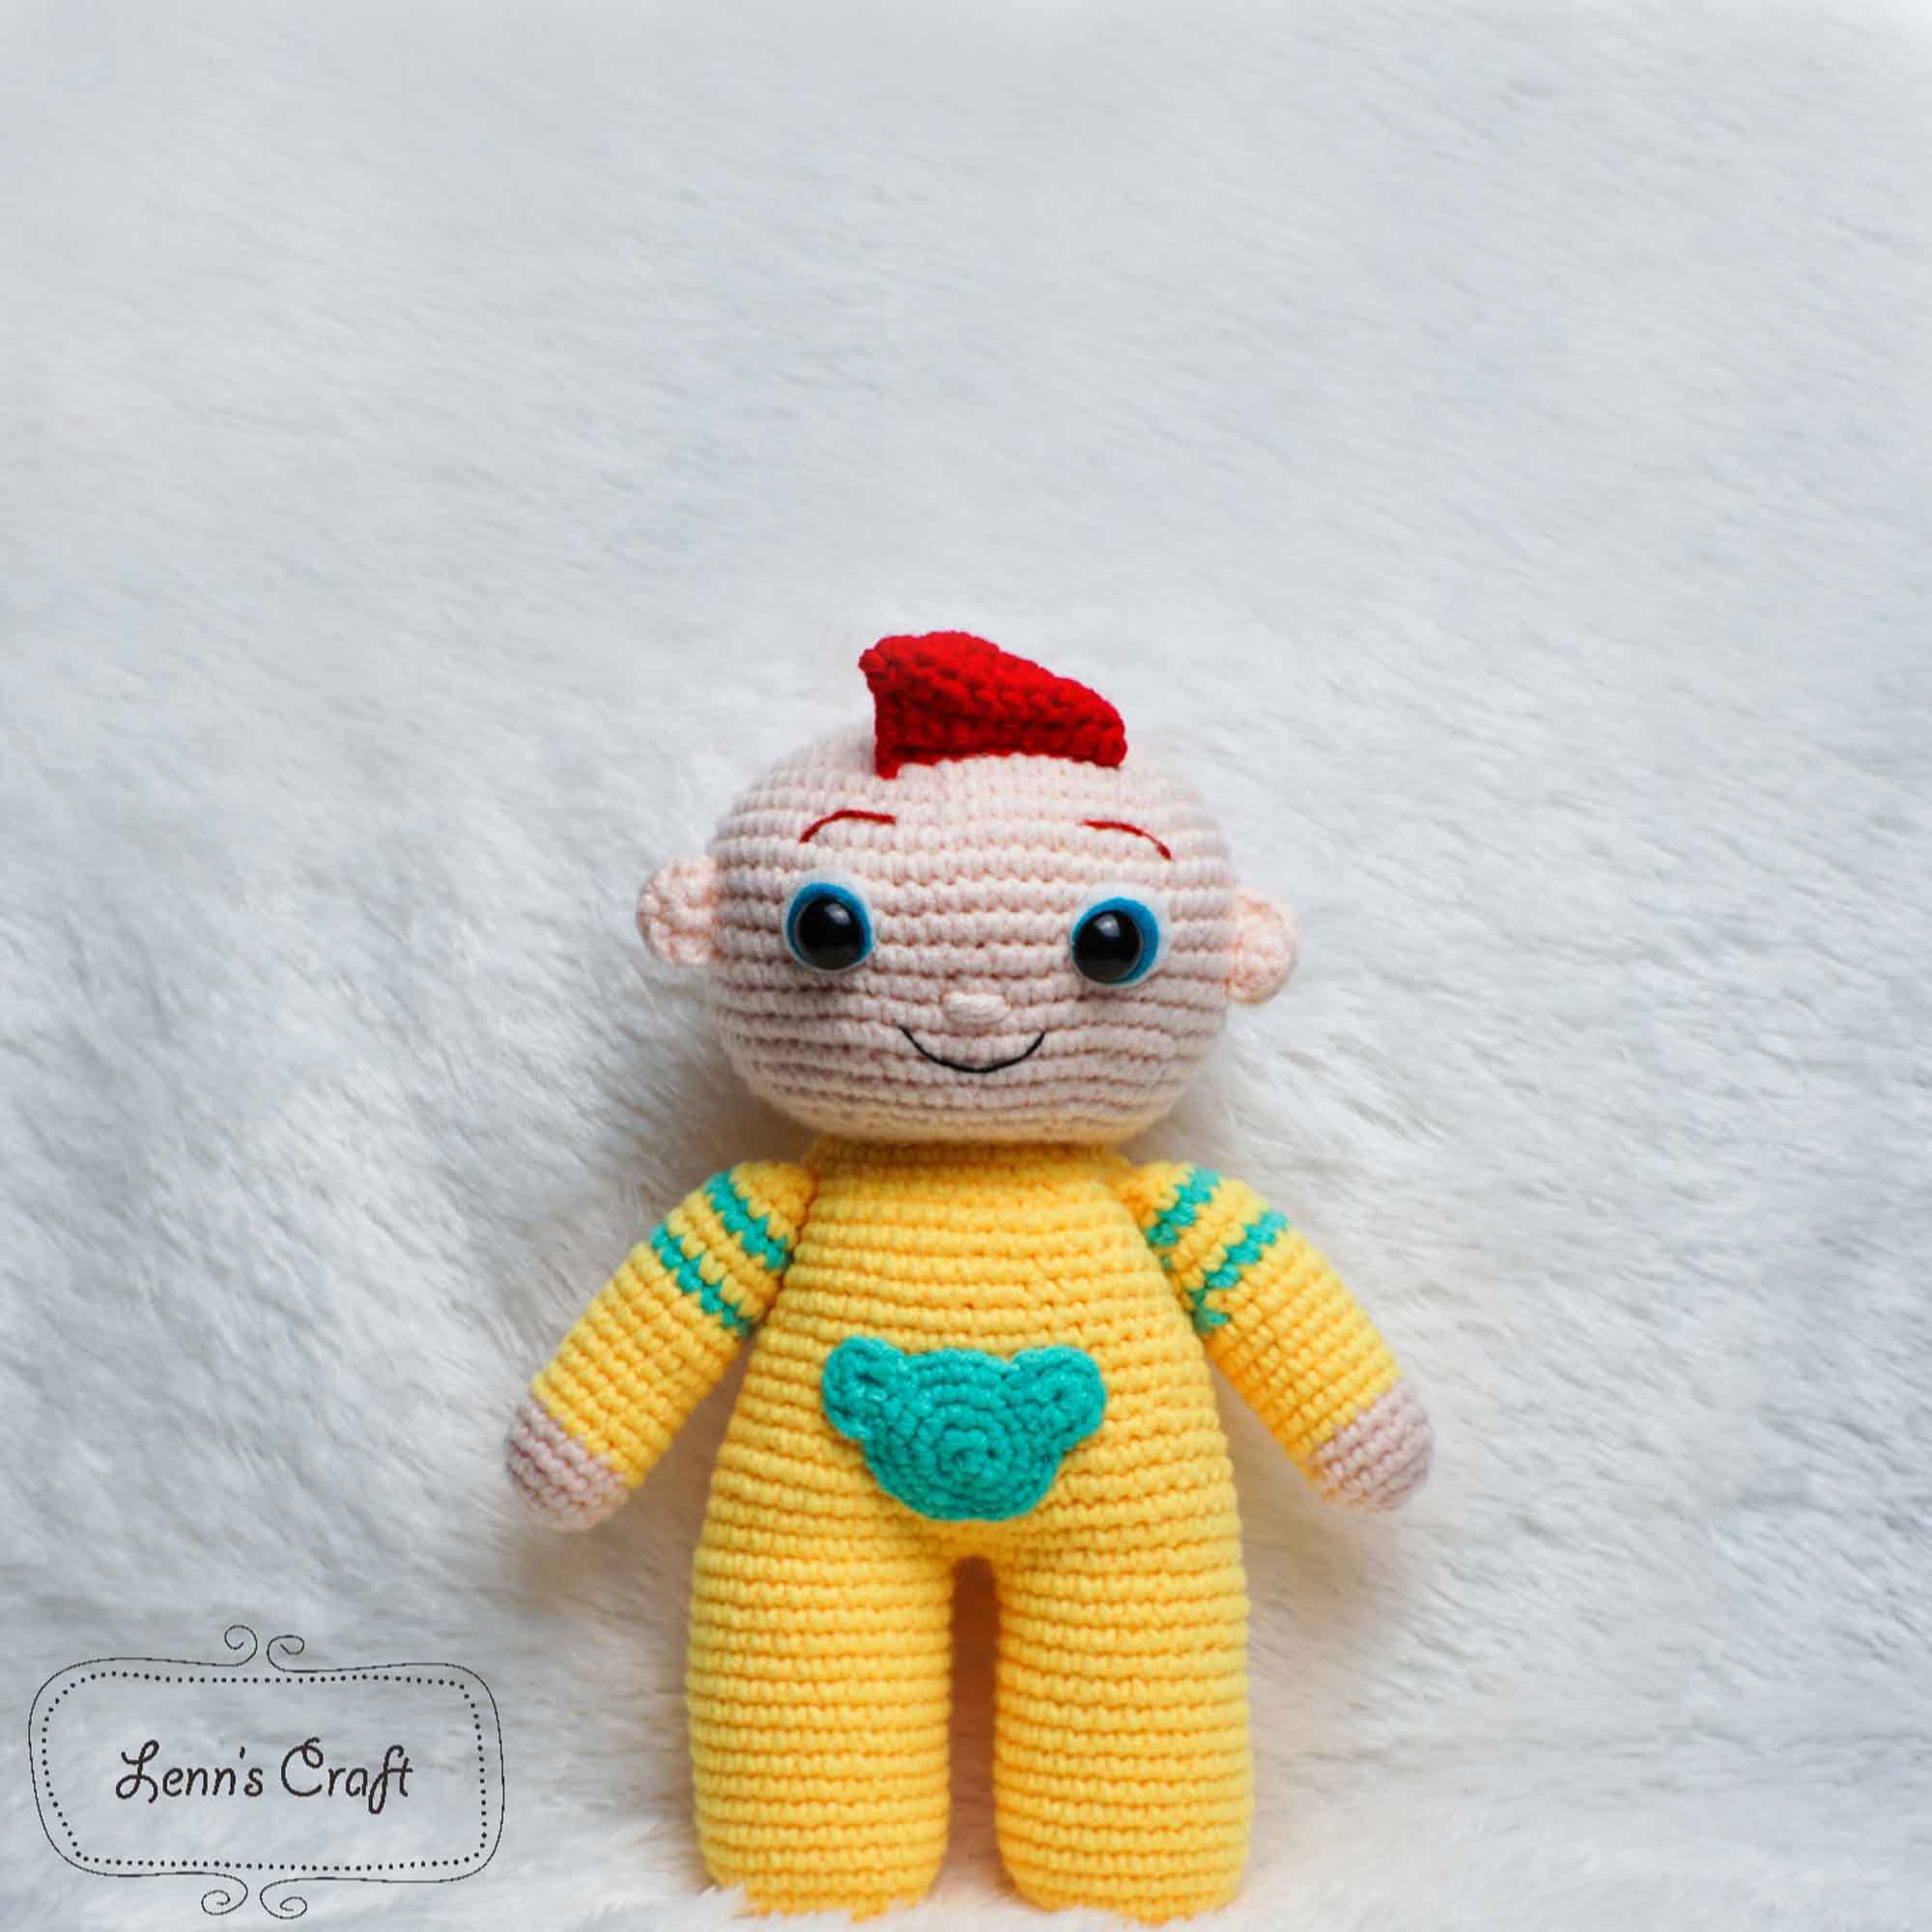 Disney White scrump voodoo amigurumi crochet toy for gift – Lenns Craft